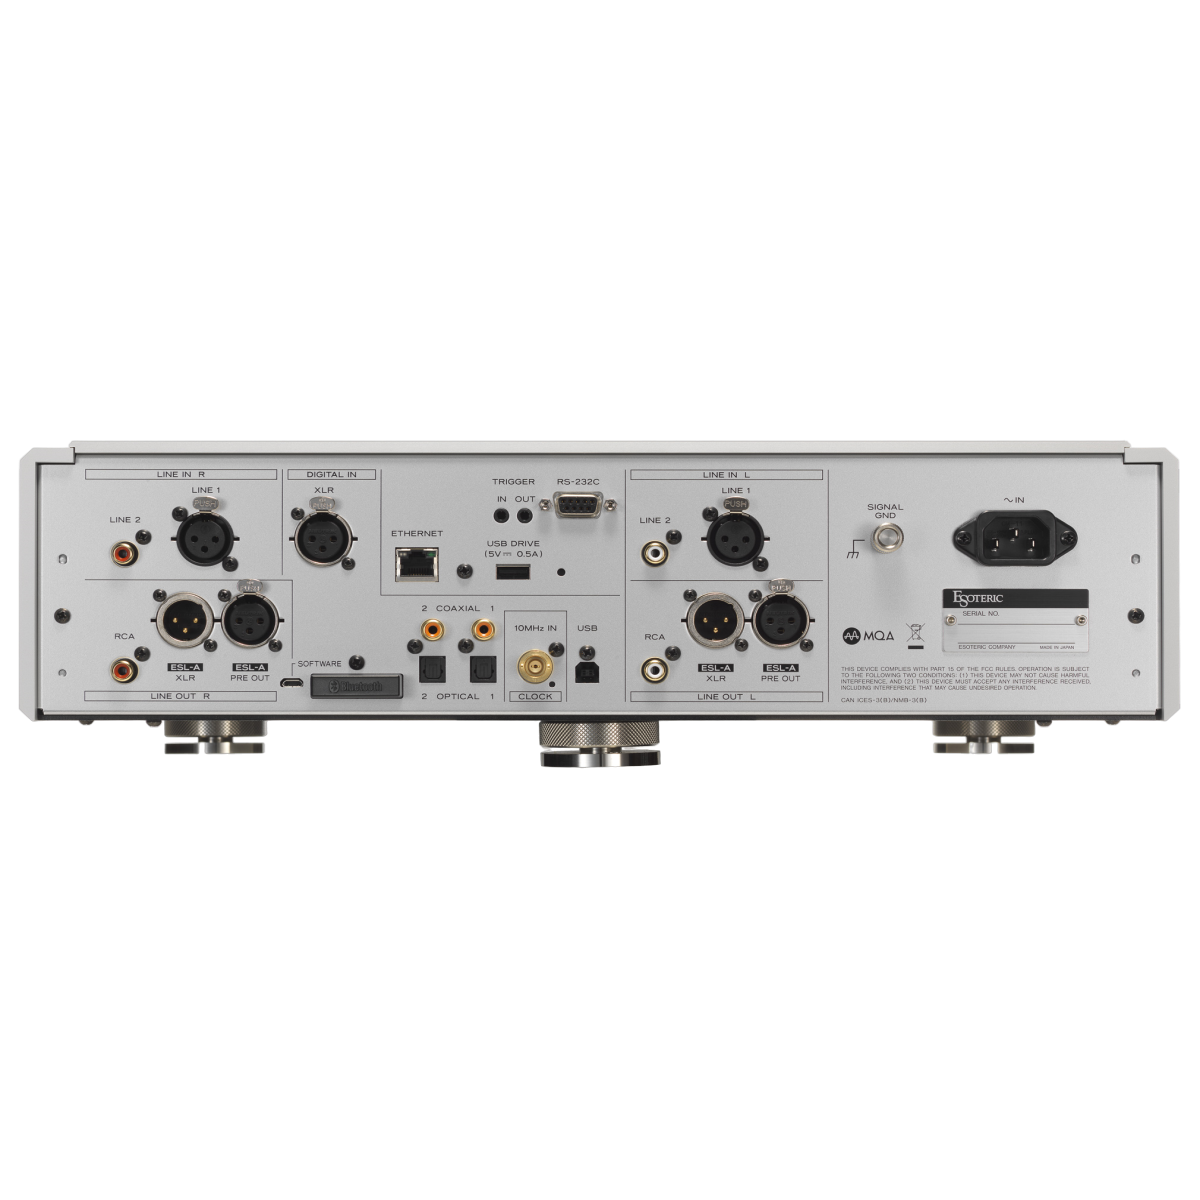 N-05XD | Network Audio Player | Preamplifier